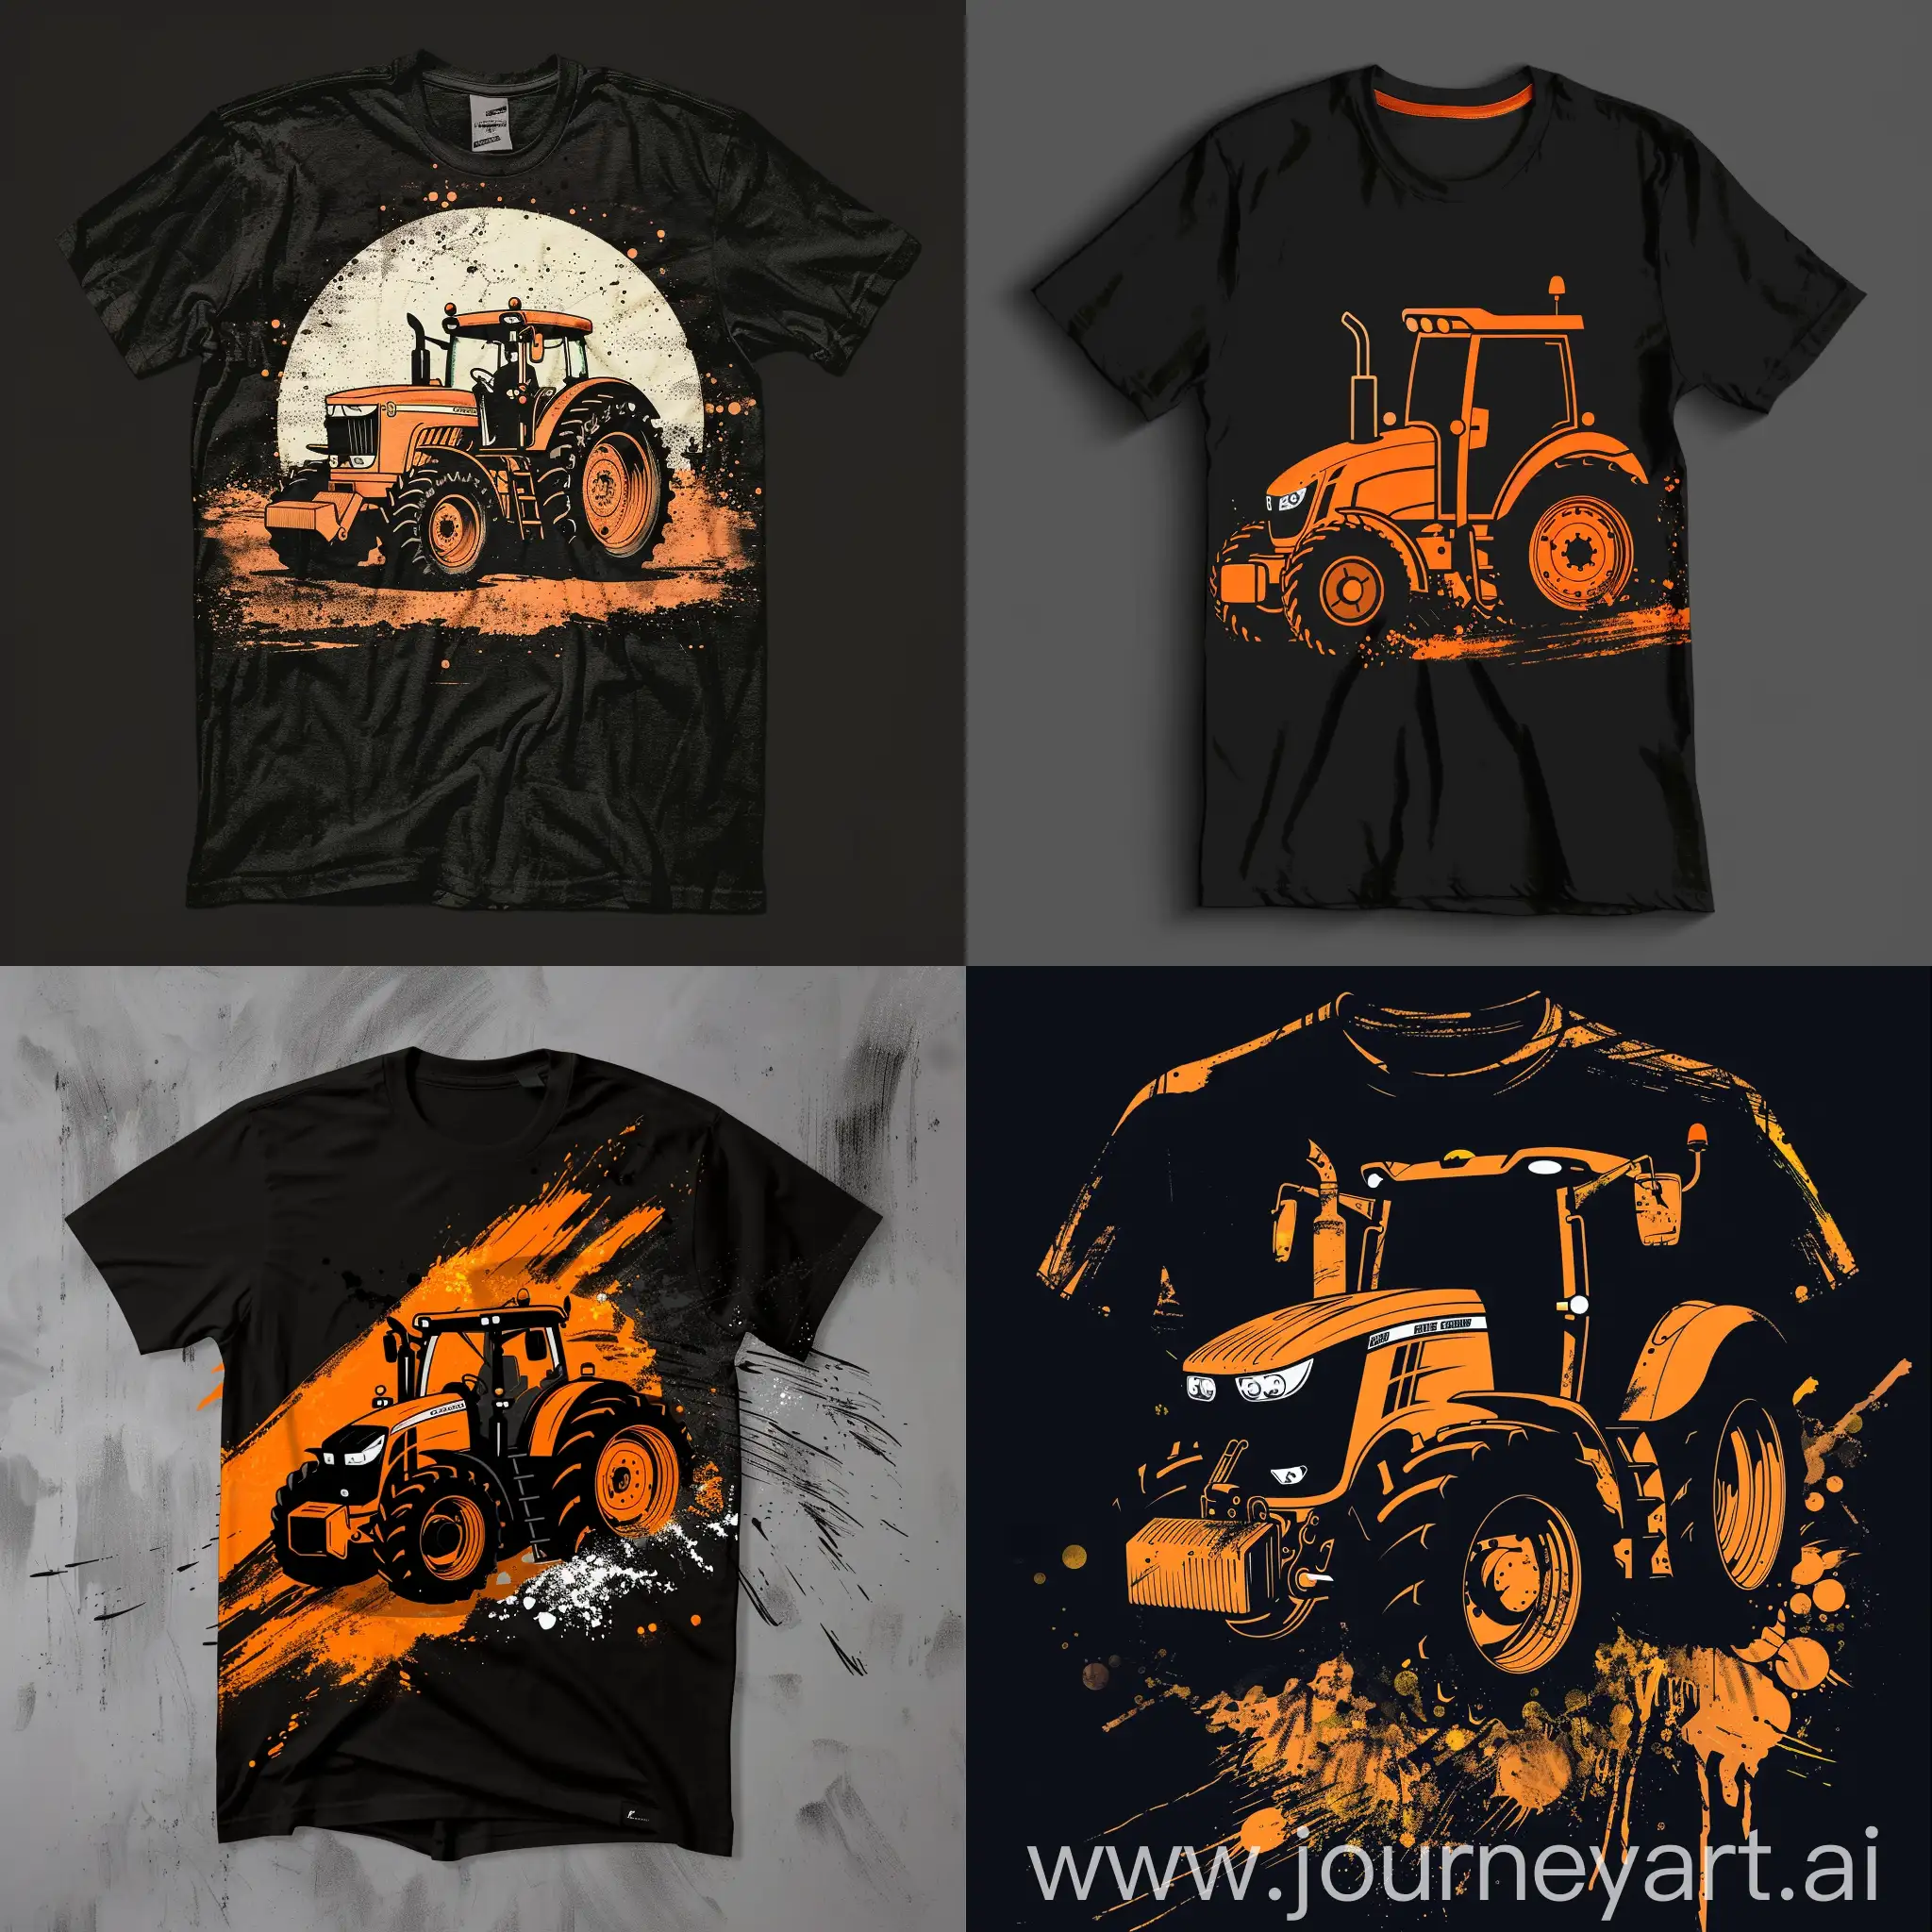 Stylish-Black-TShirt-Design-with-Orange-Tractor-Graphic